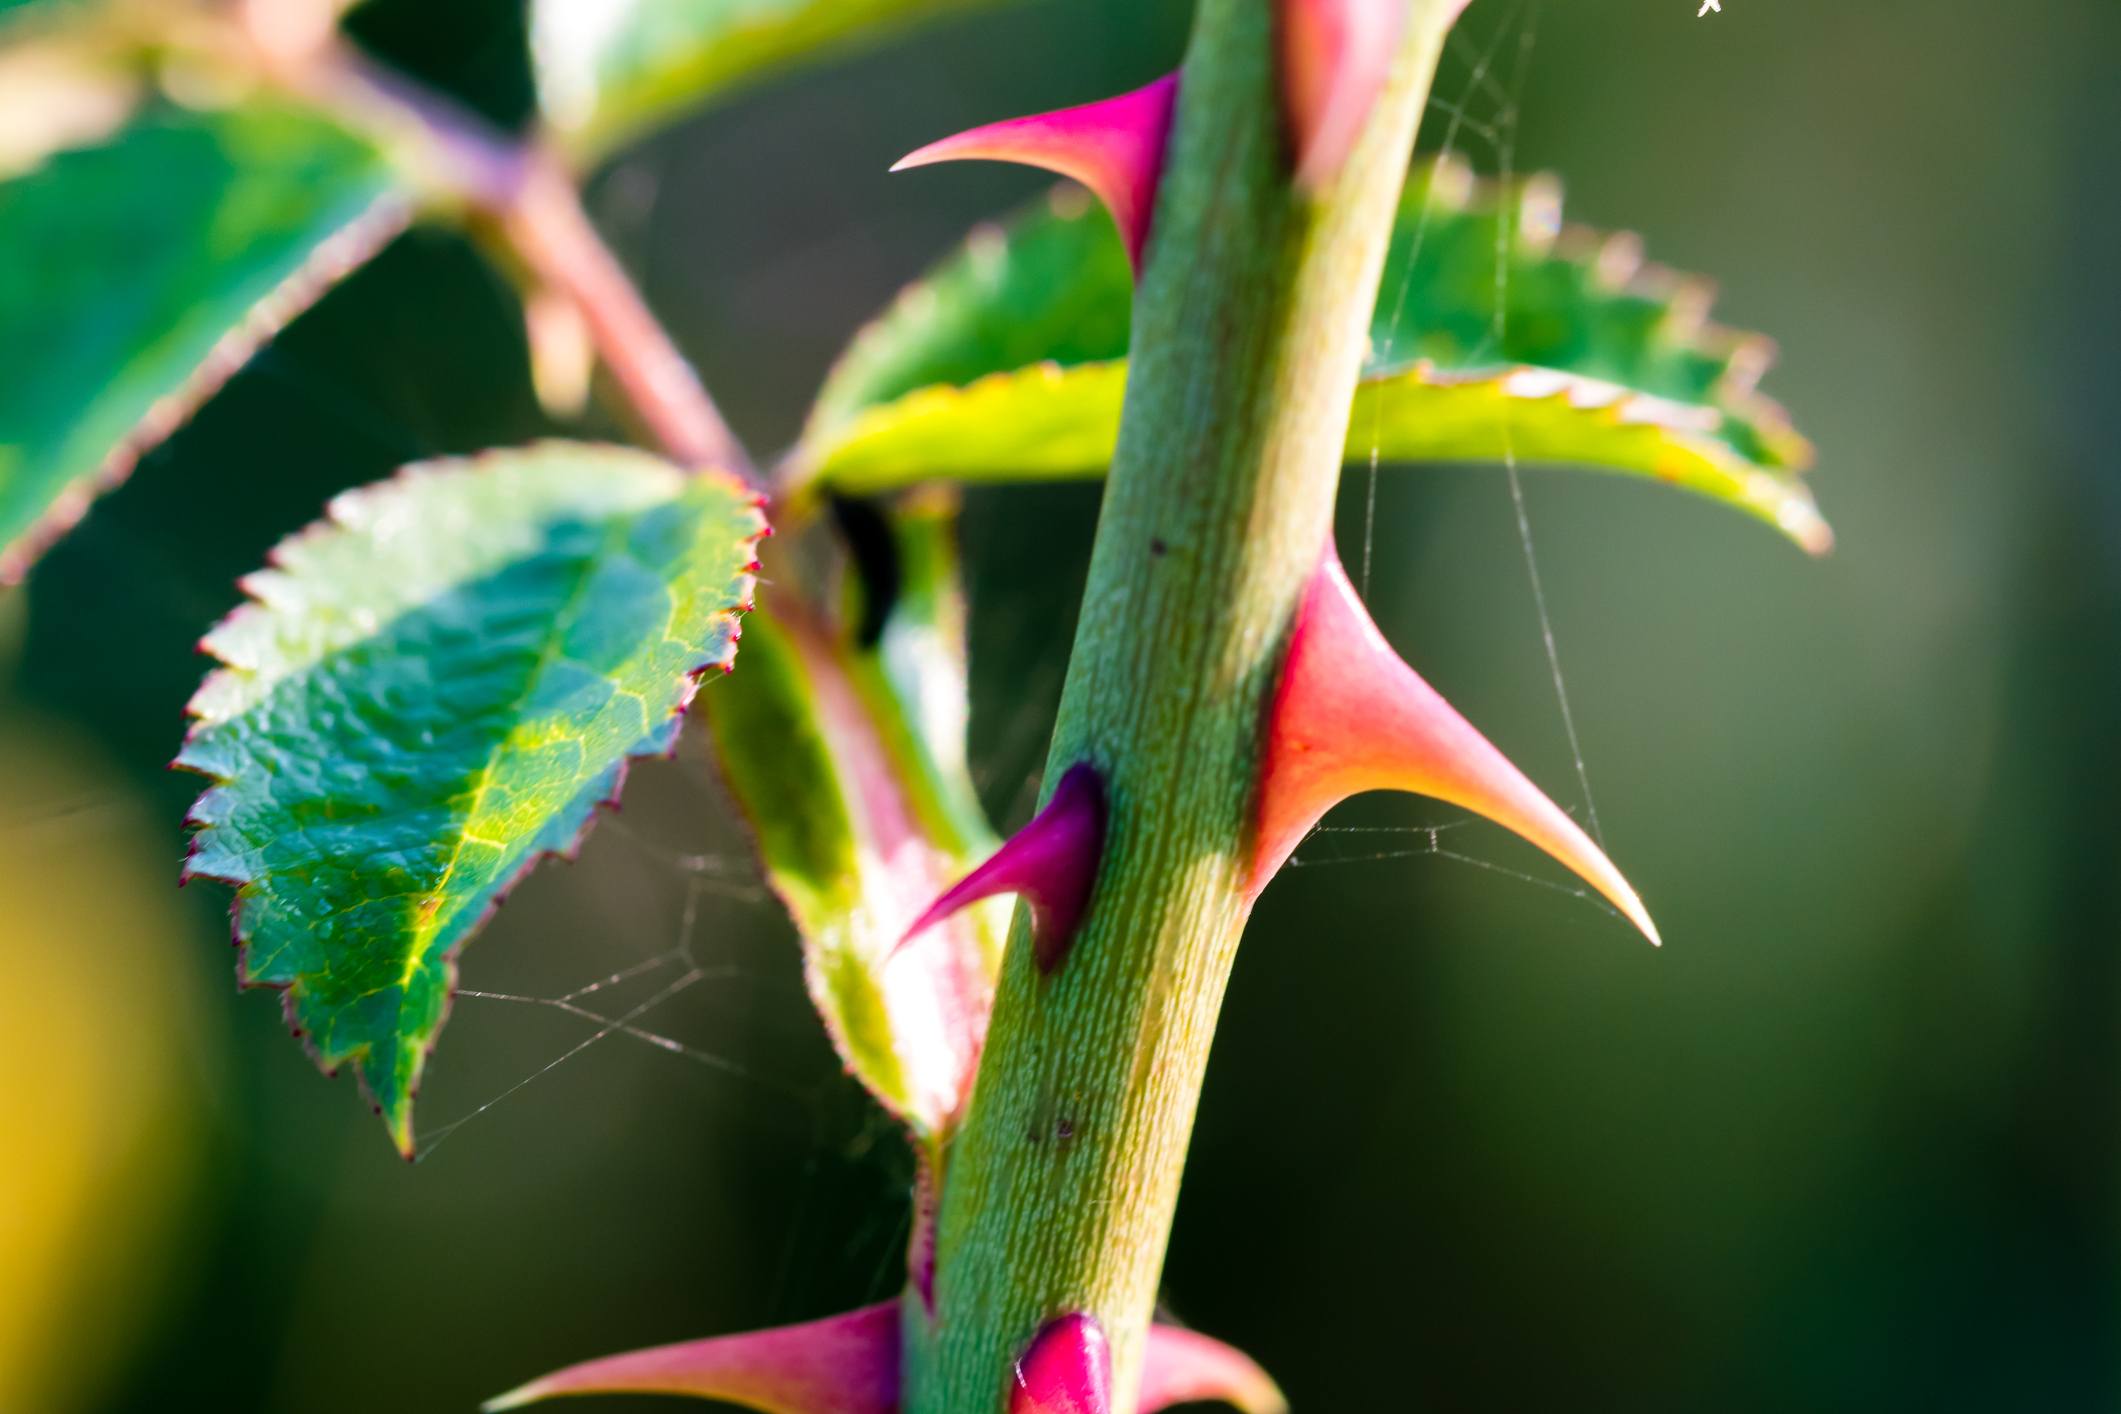 Sharp thorns of a wild rose, close-up shot